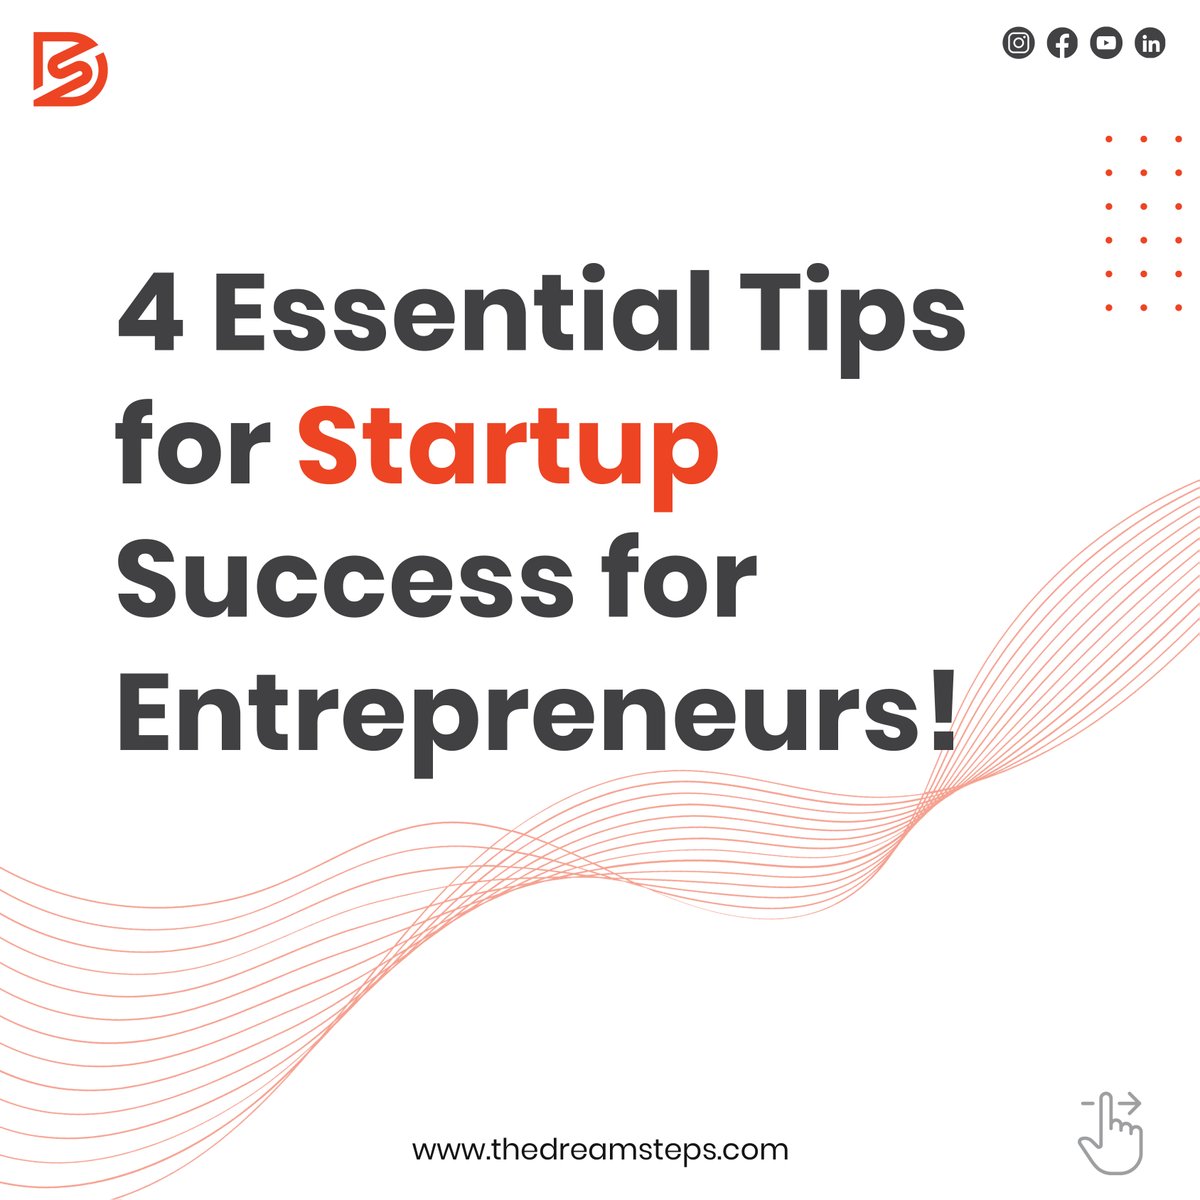 Check out the full post on LinkedIn: shorturl.at/ixAX5.

#StartupTips #Entrepreneurship #TipTuesday #BusinessTips #Startup #TeamBuilding #BusinessSuccess #Dreamers #TeamDreamSteps